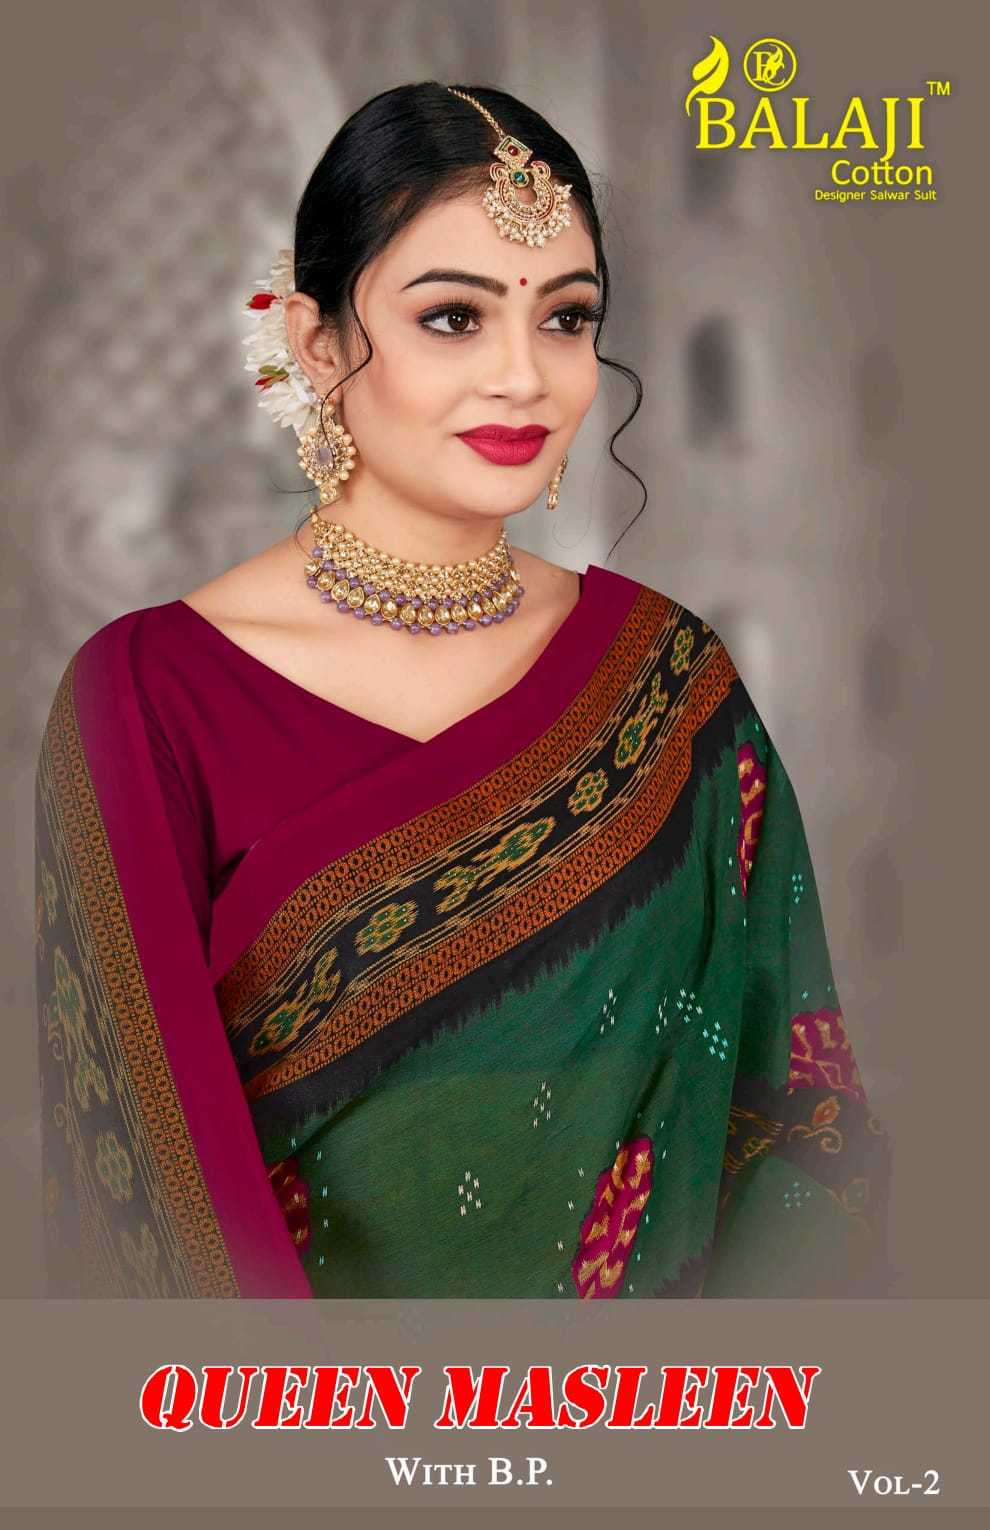 balaji cotton queen masleen vol 2 traditonal wear beautiful sarees collection